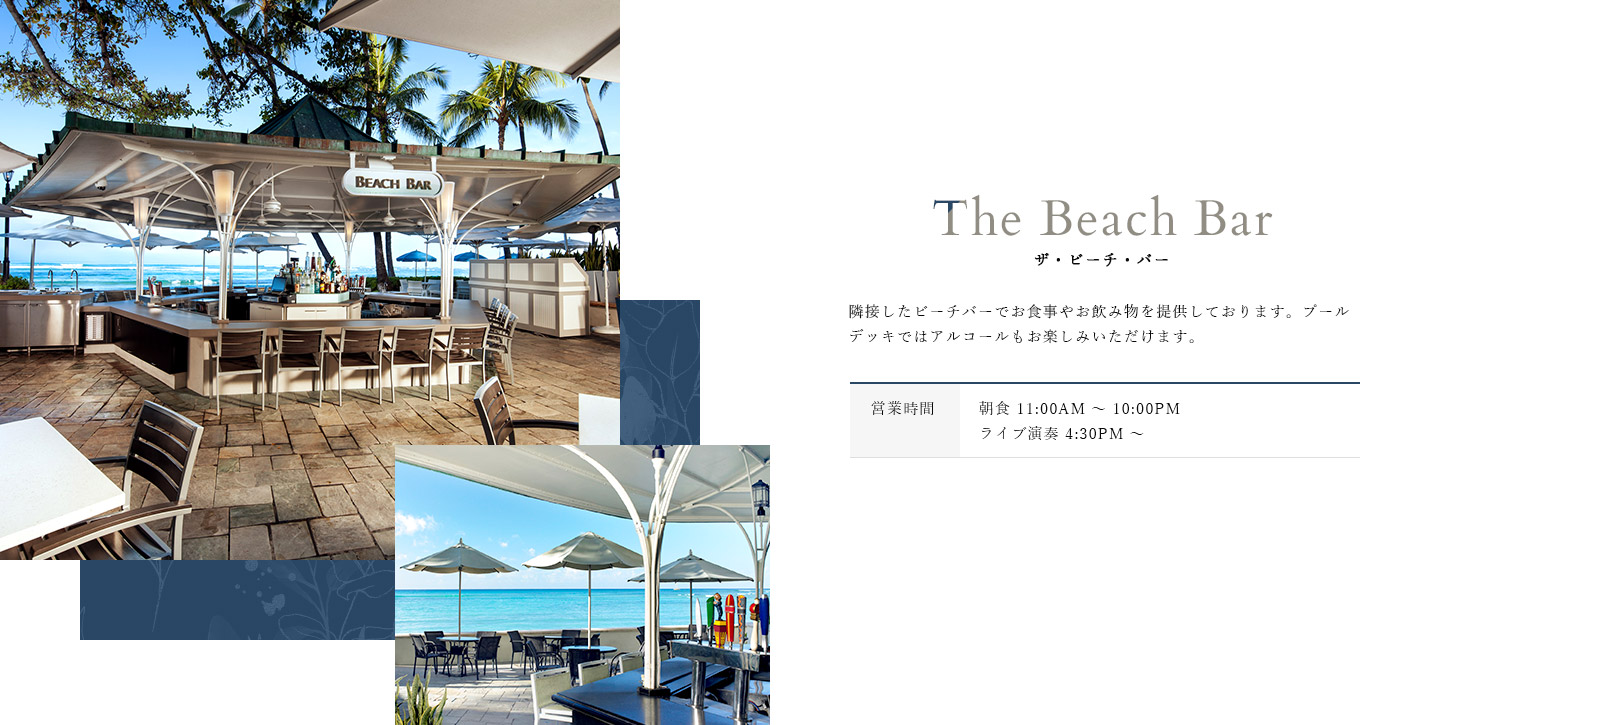 The Beach Bar ザ・ビーチ・バー